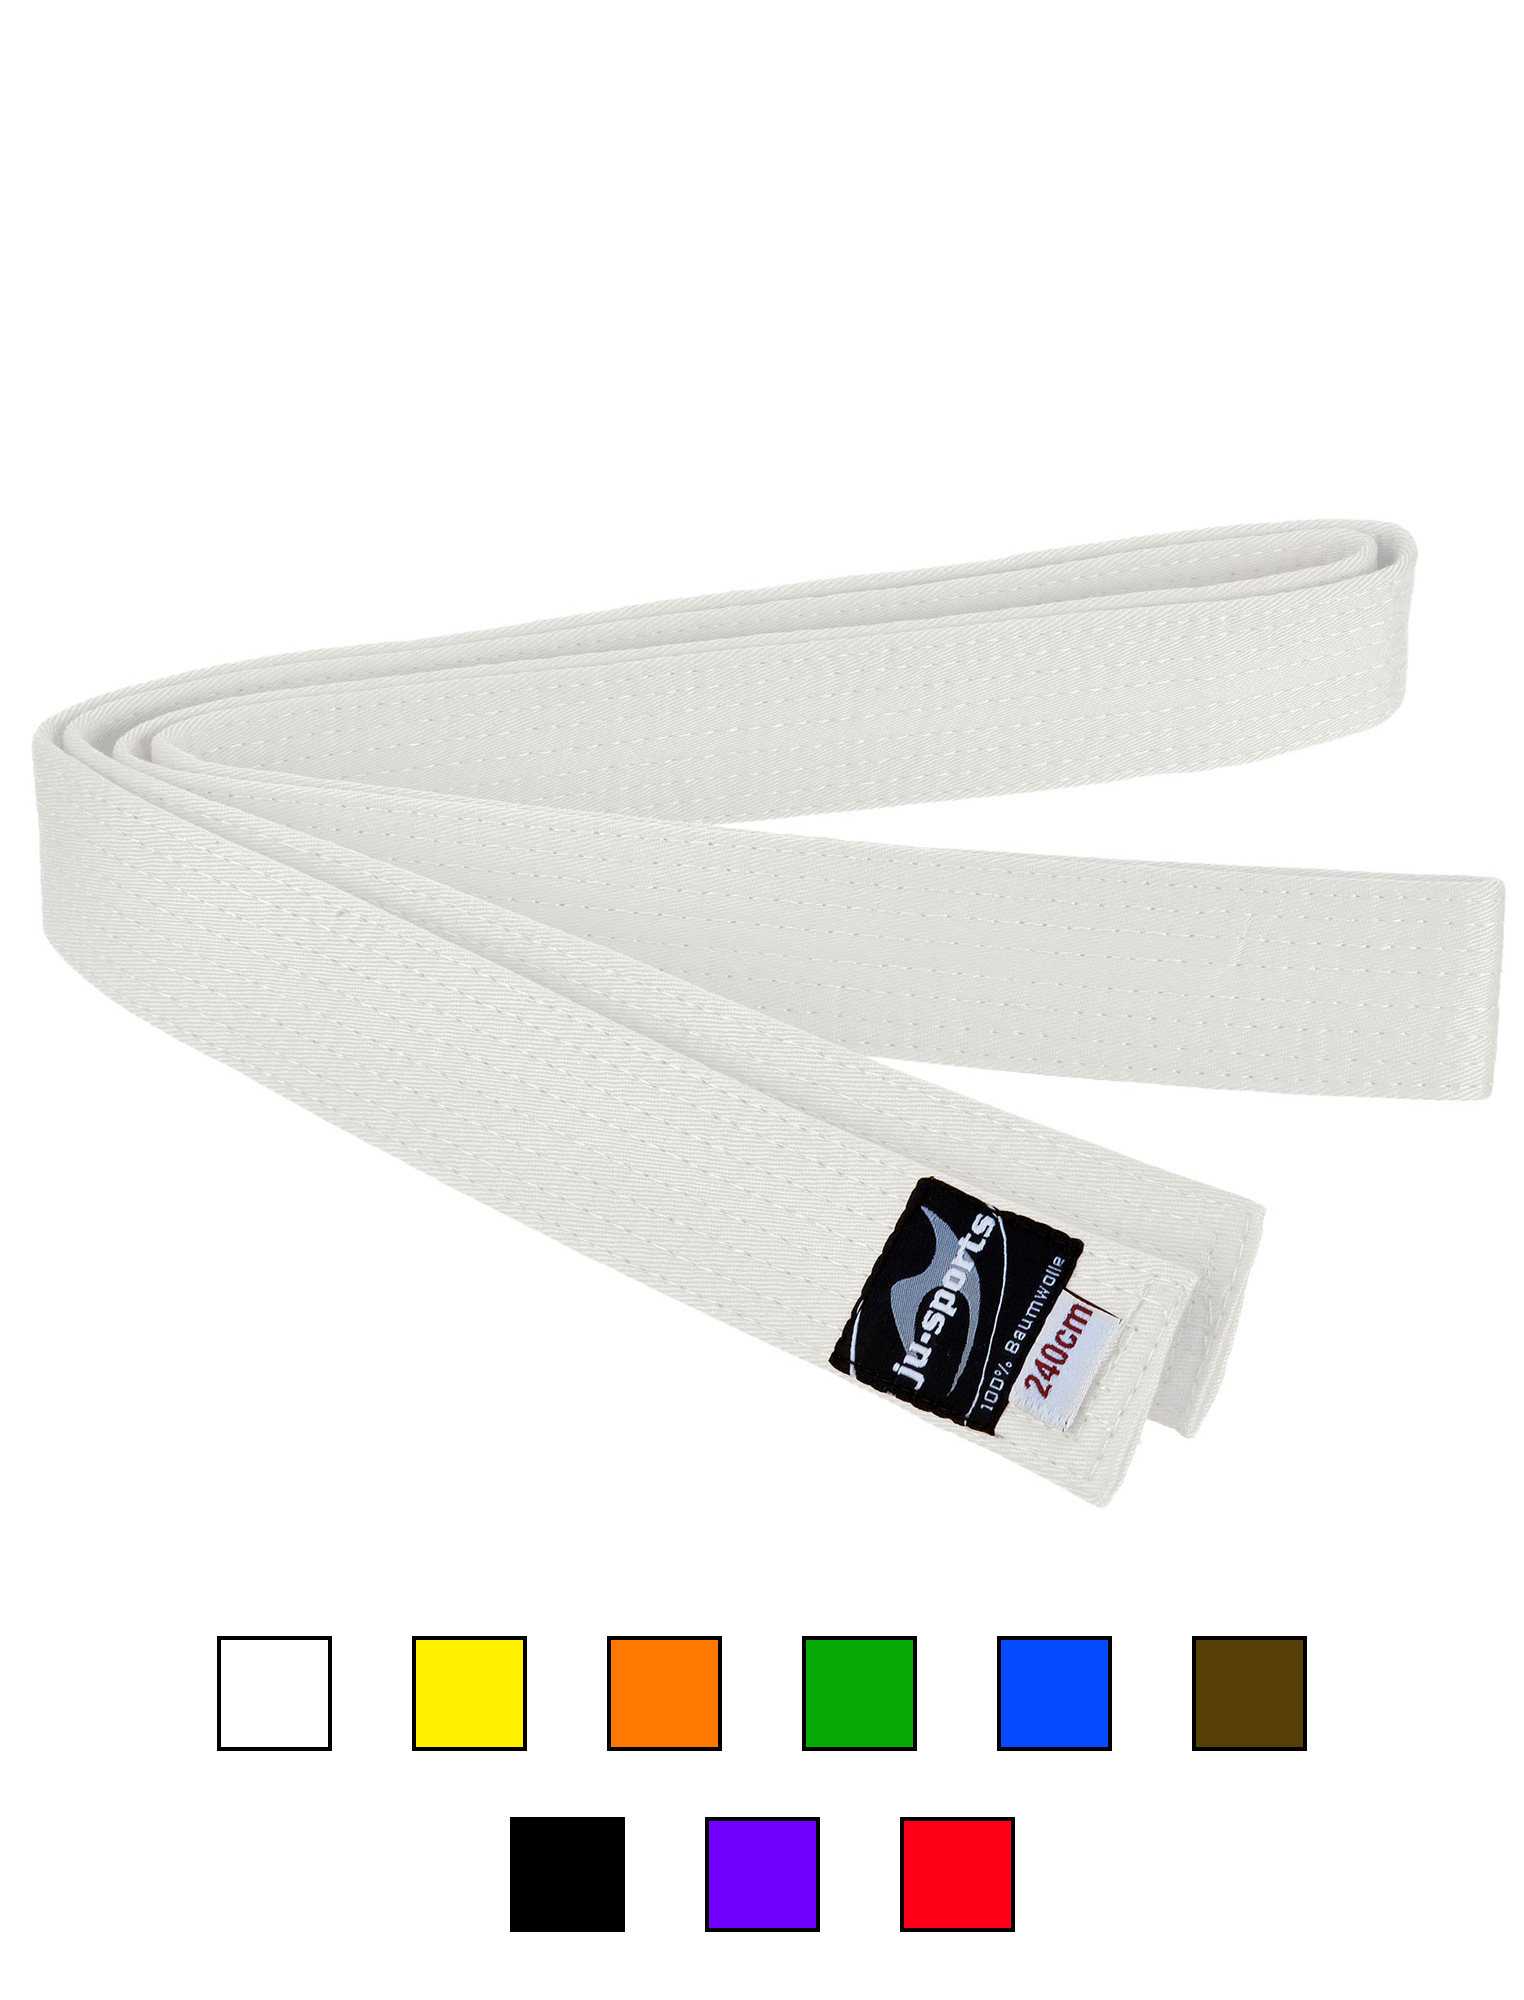 Ju-Sports budo belt white